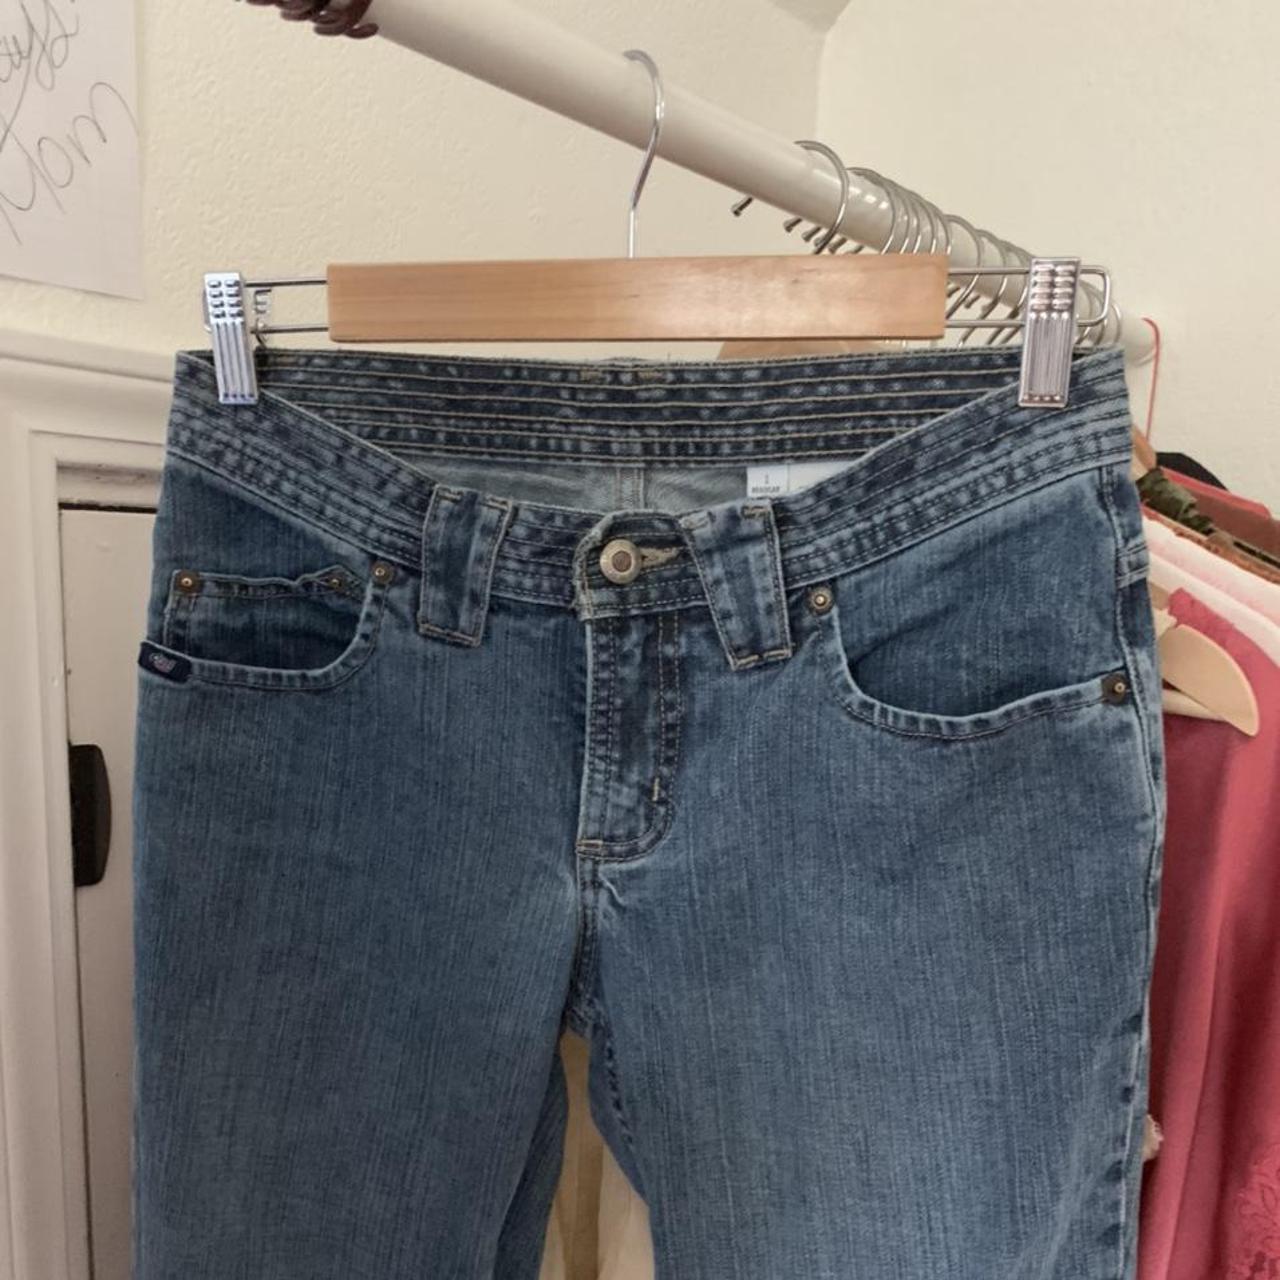 Cruel Denim mid-rise flare jeans. Tag labeled “1... - Depop